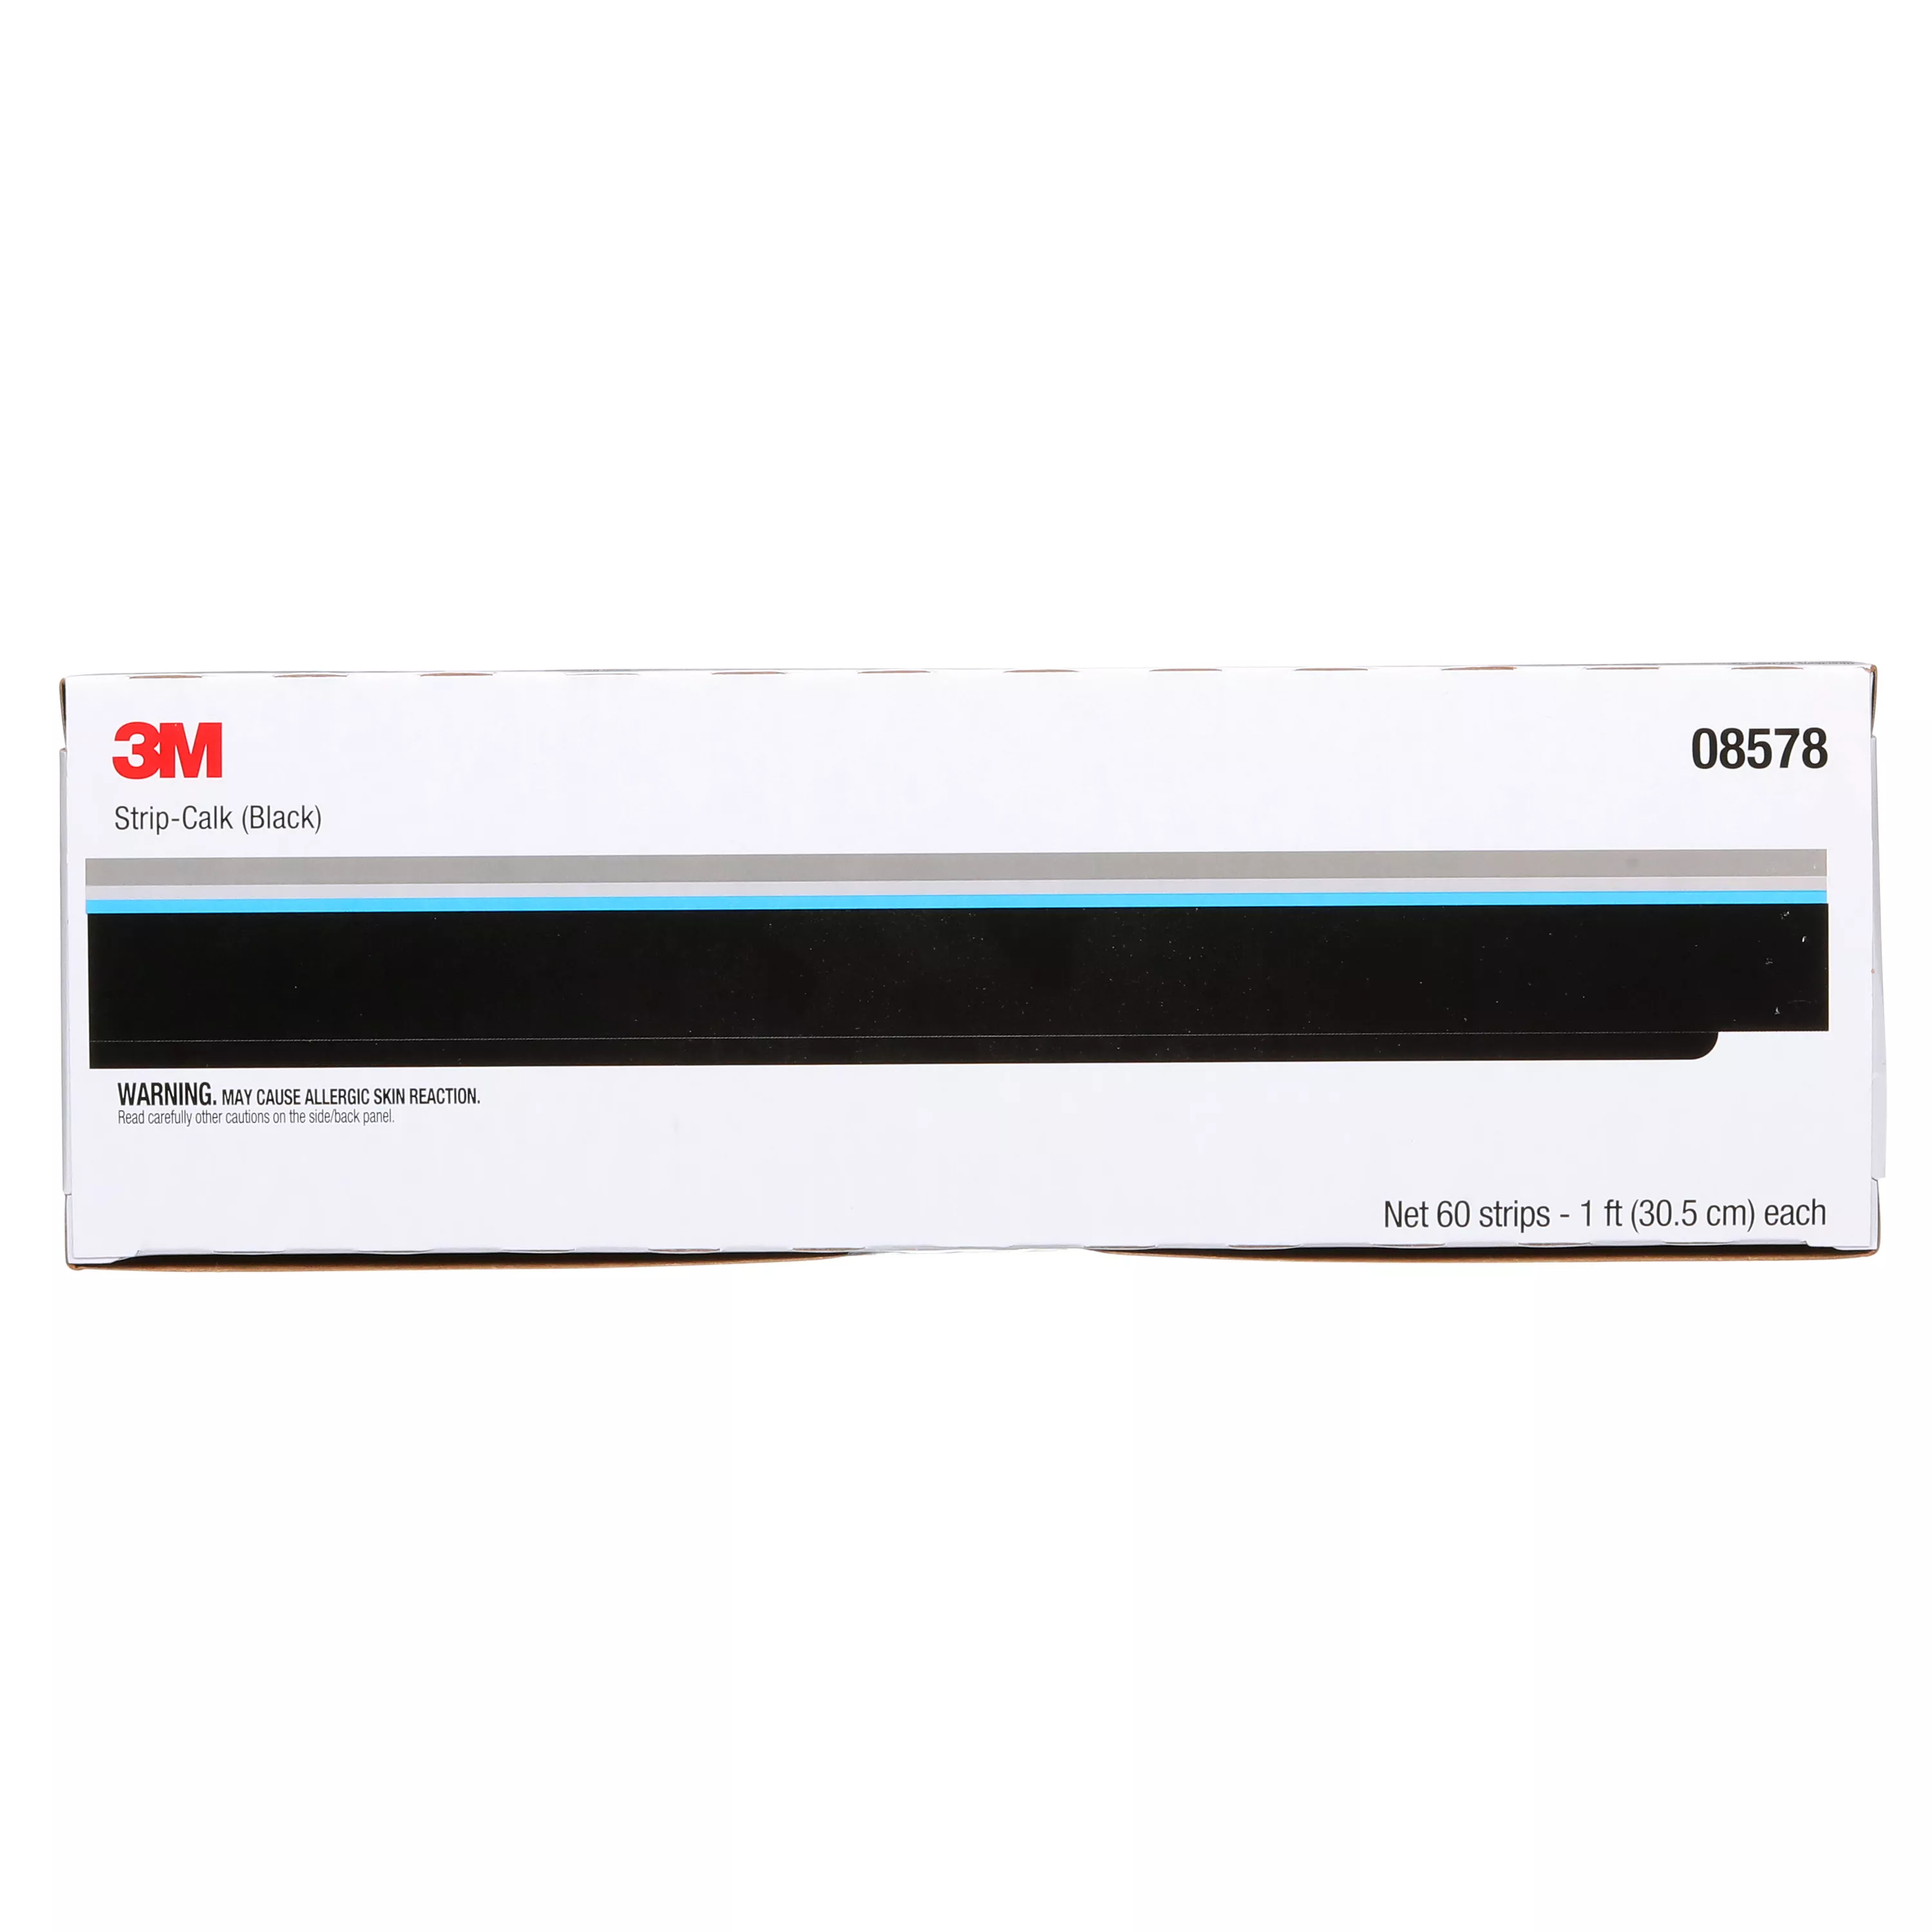 3M™ Strip Calk, 08578, Black, 1 ft Strips, 60 per carton, 12 cartons per
case